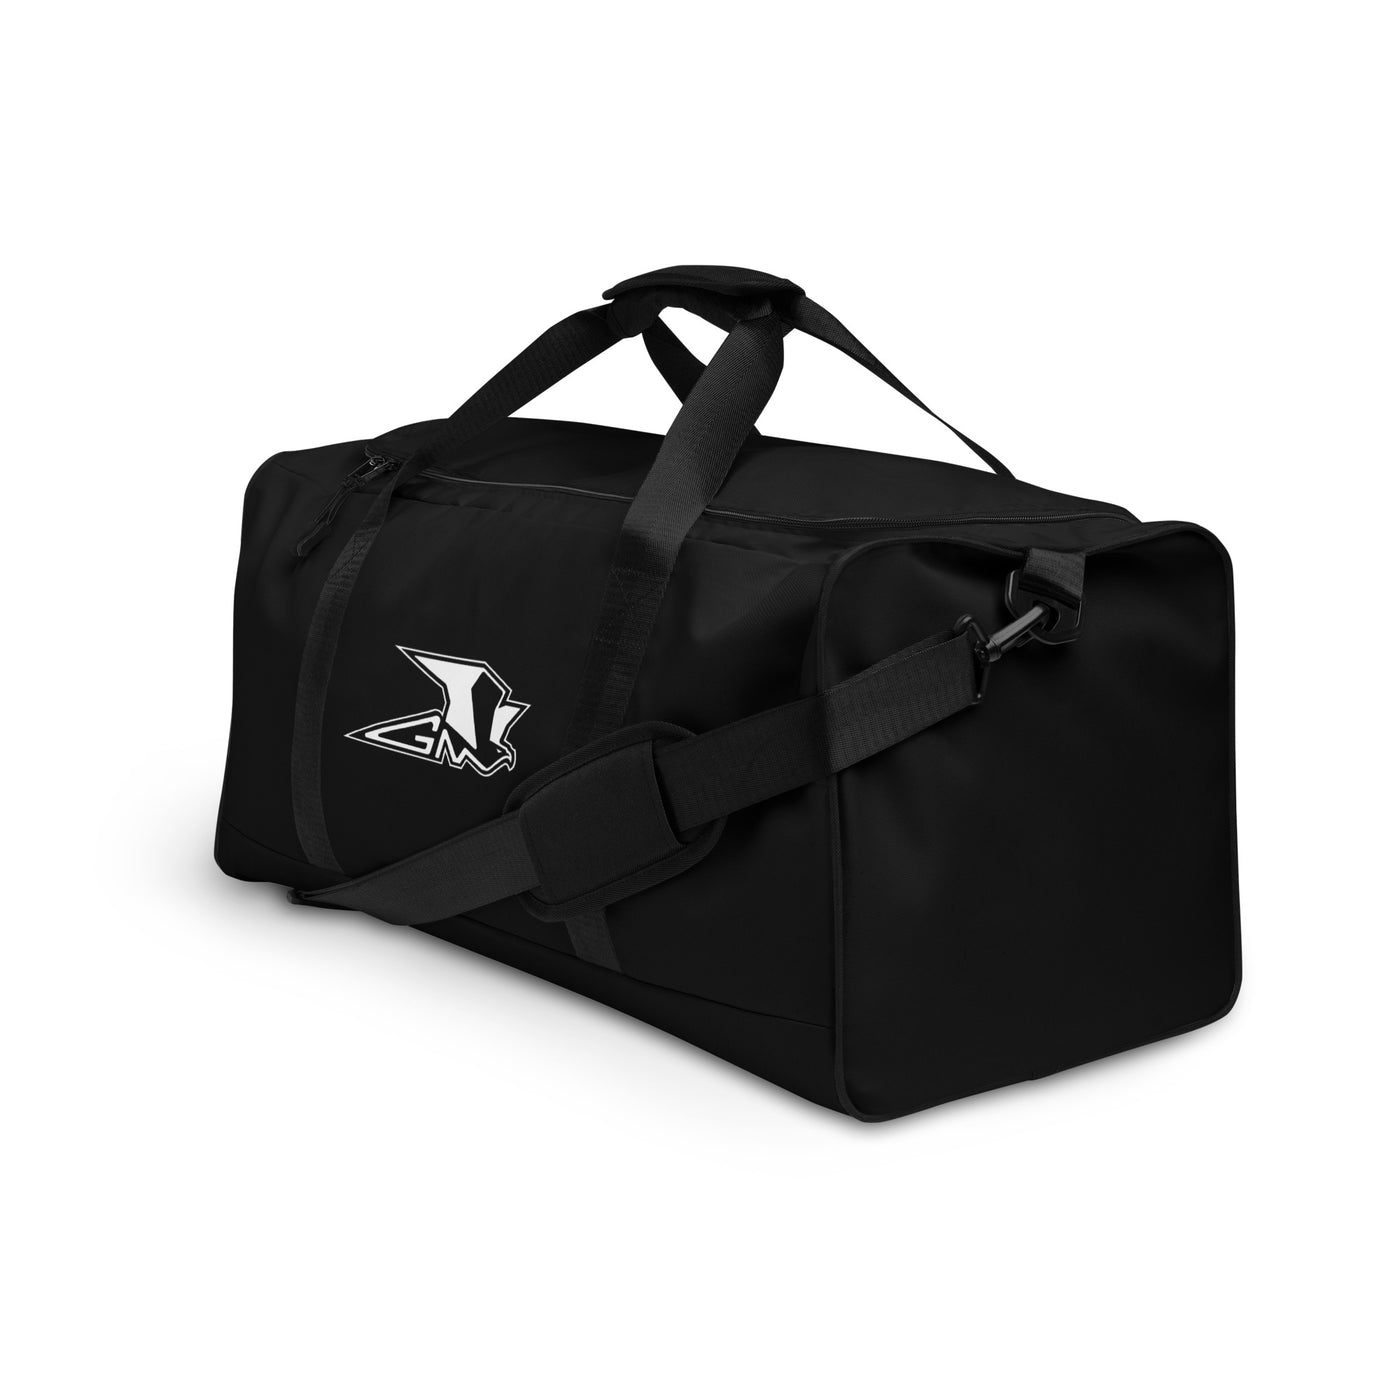 Gendo Milano Emblem Sports Bag